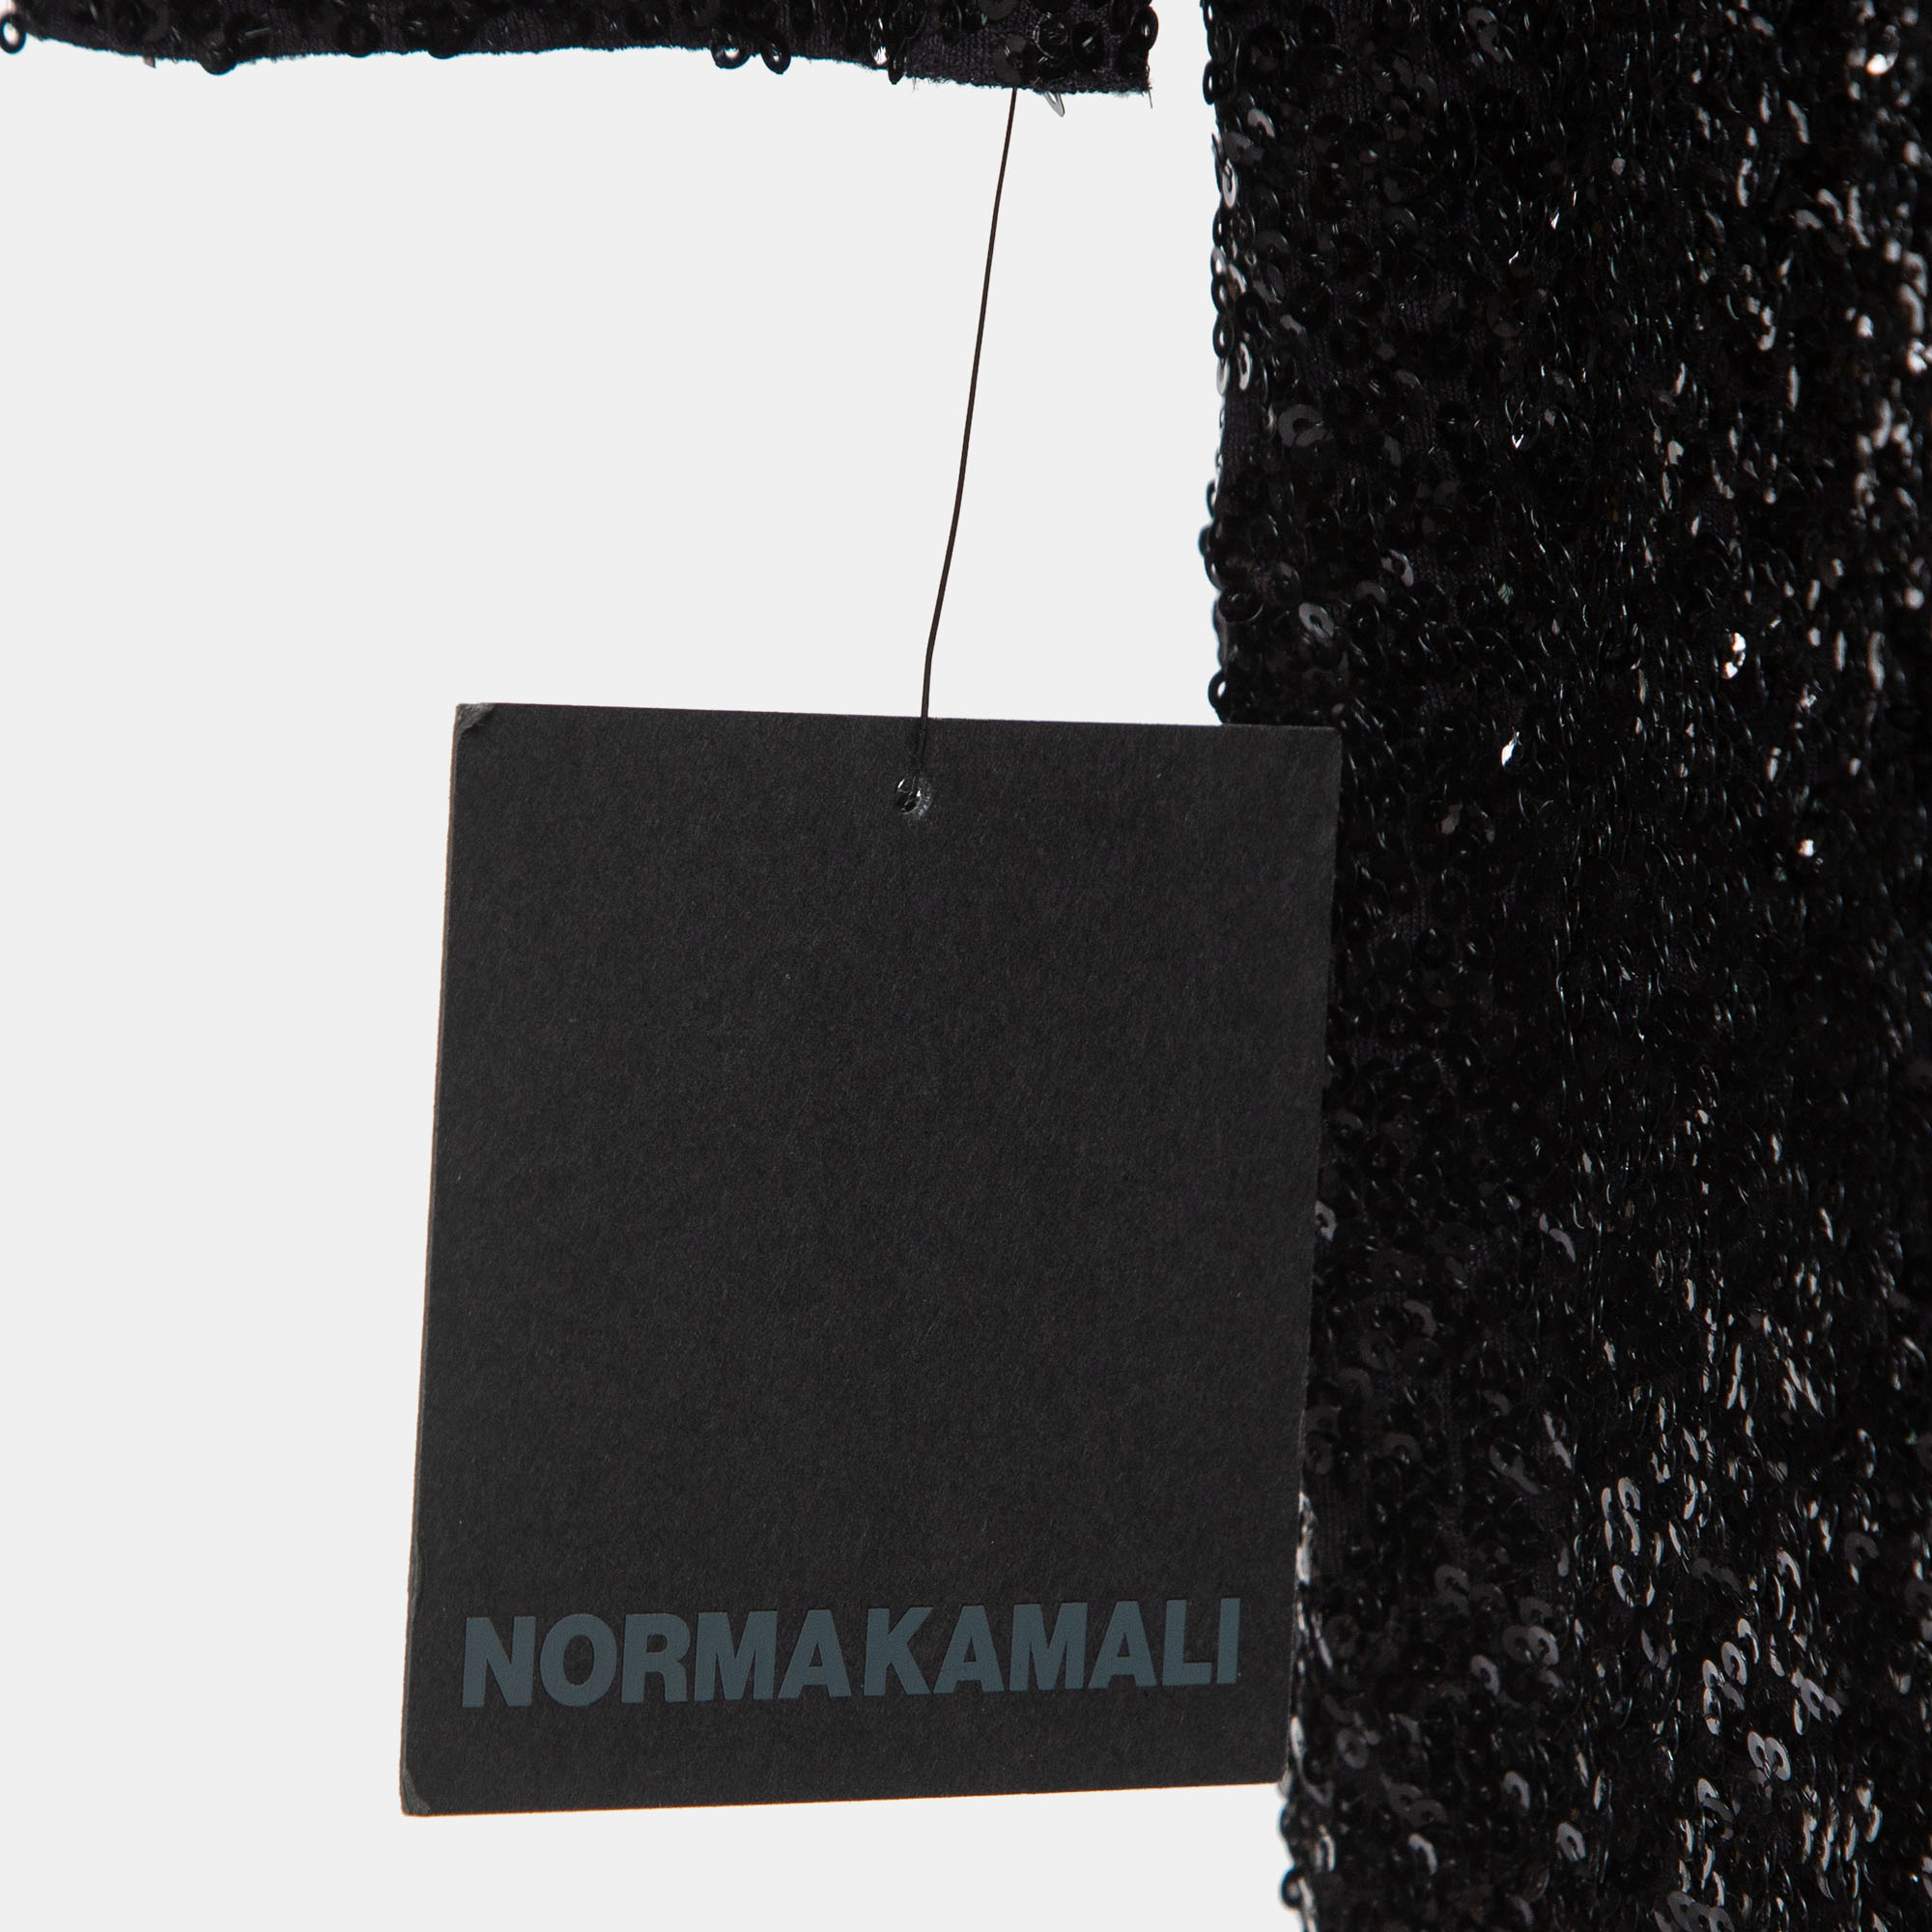 Norma Kamali Black Sequin Detail Fishtail Midi Dress XL